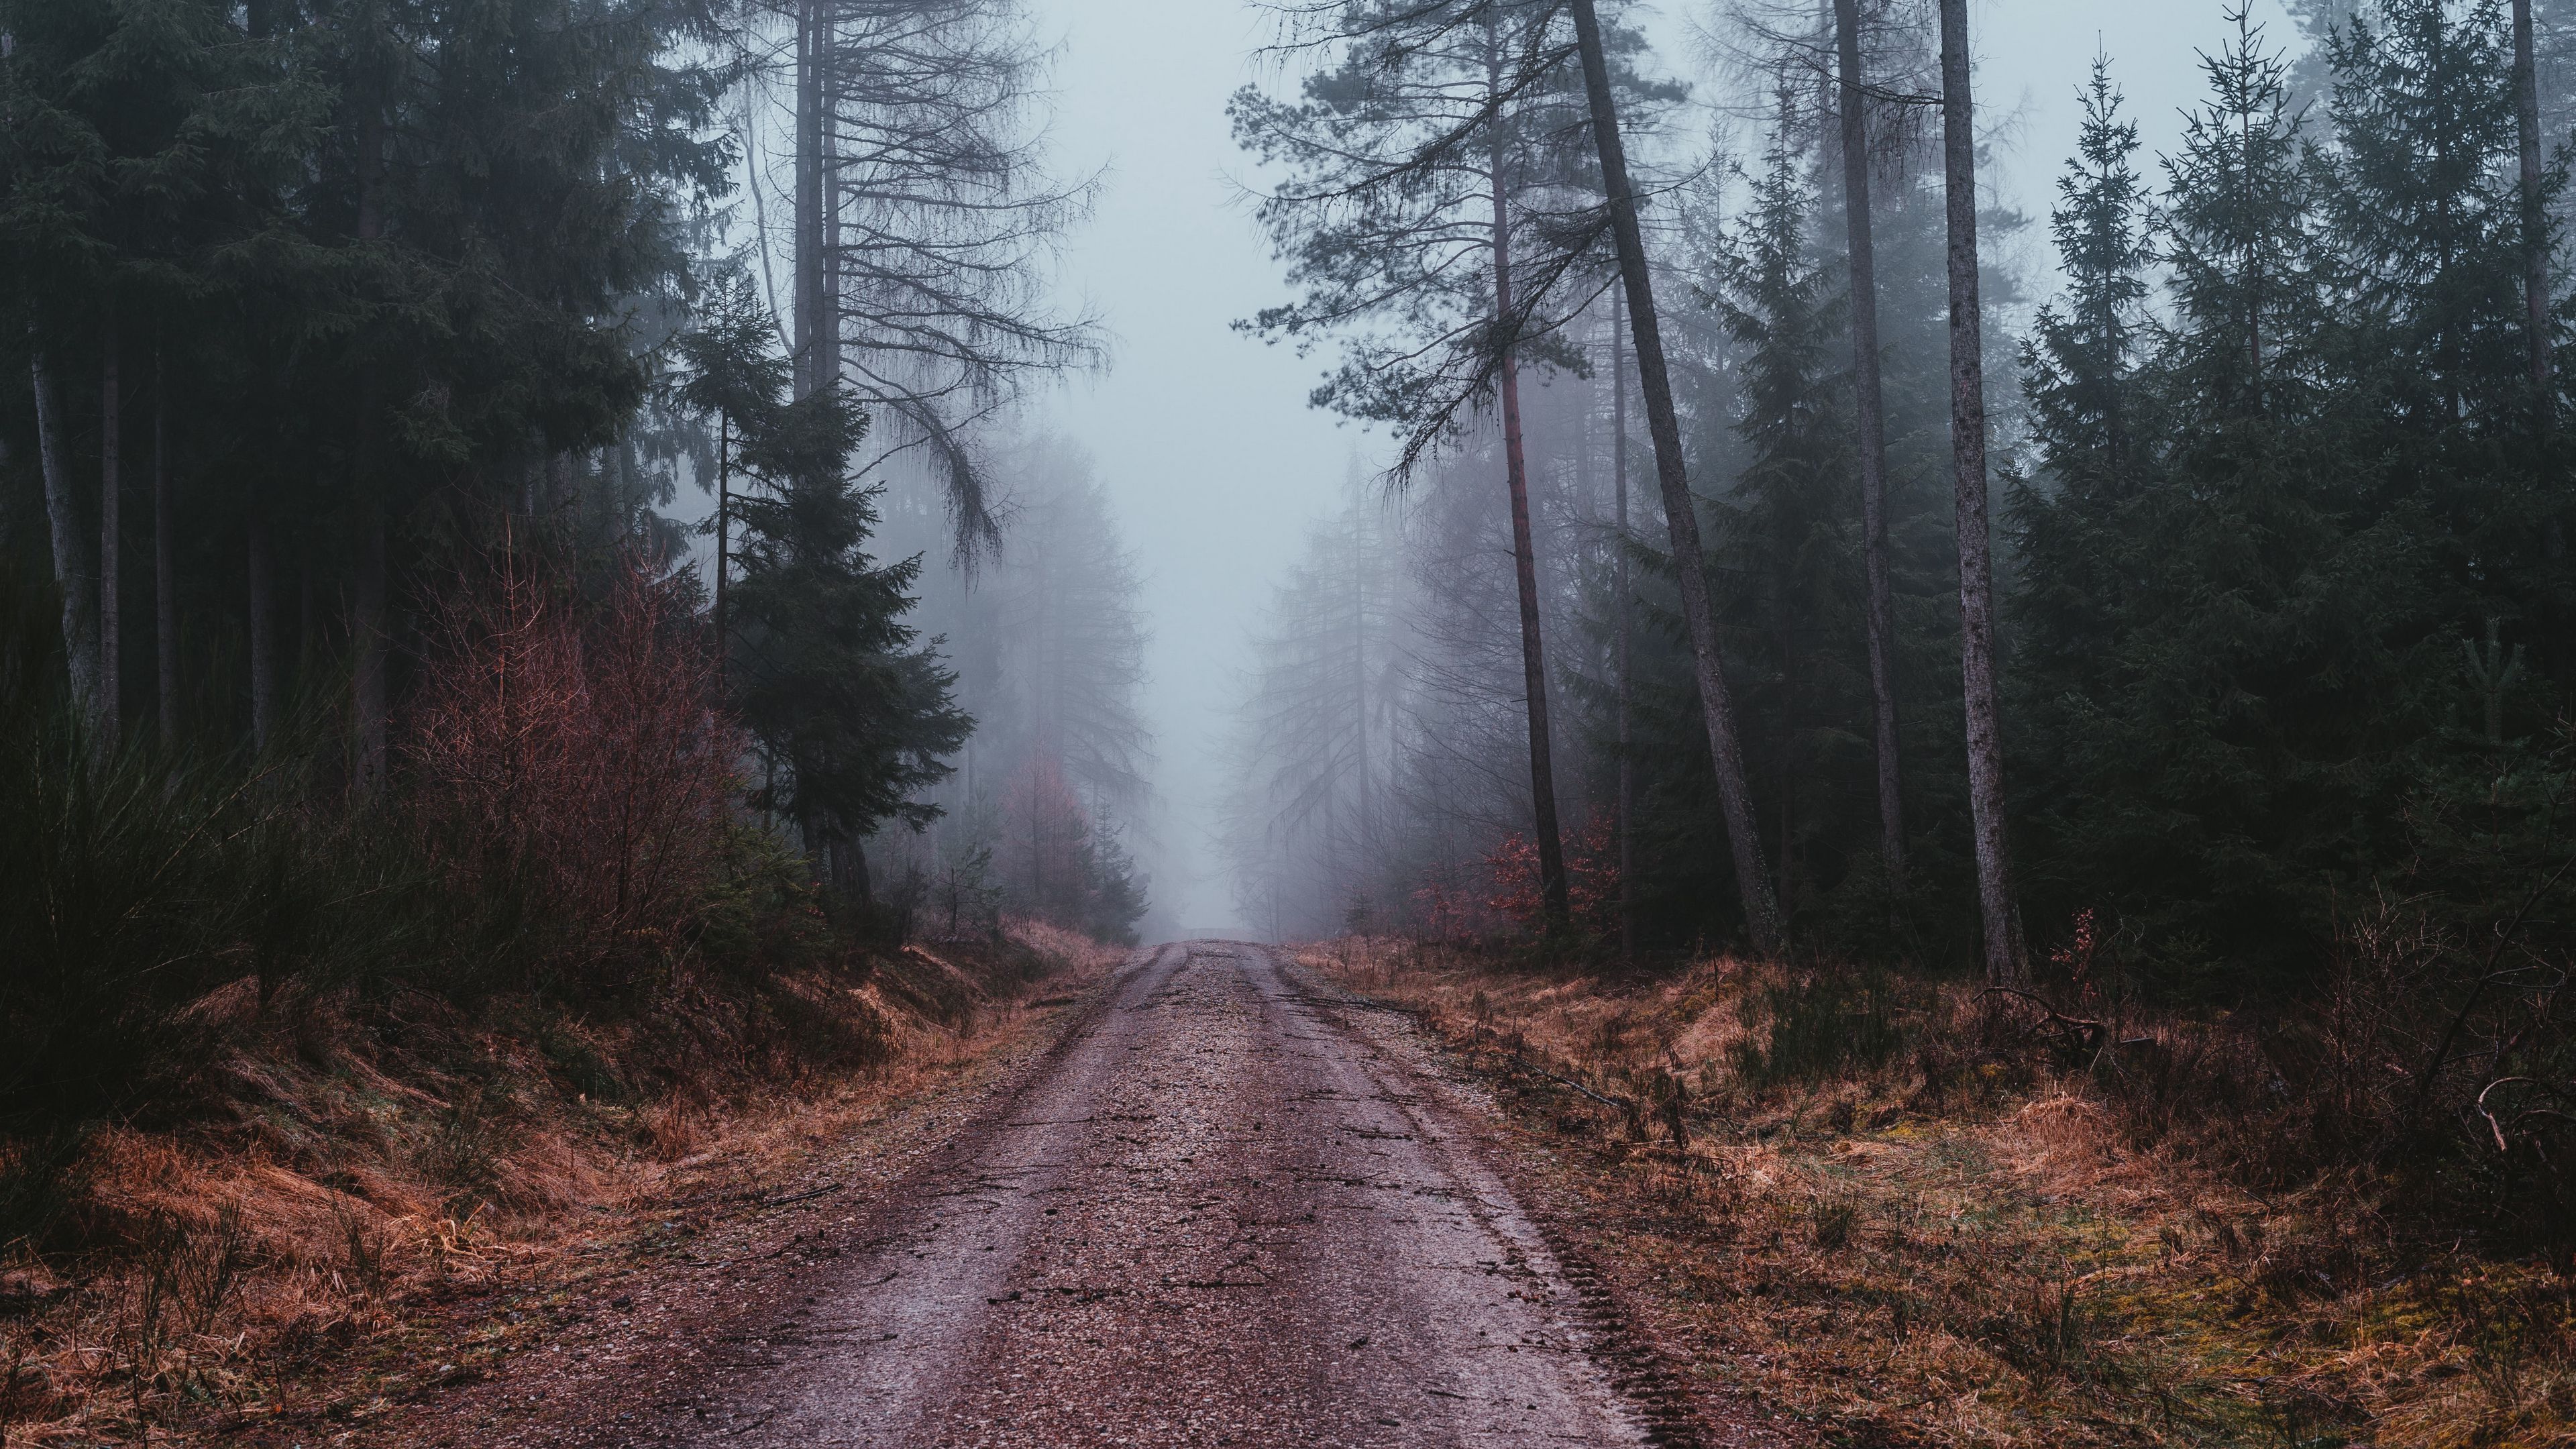 Download wallpaper 3840x2160 fog, road, gloomy, forest 4k uhd 16:9 hd  background